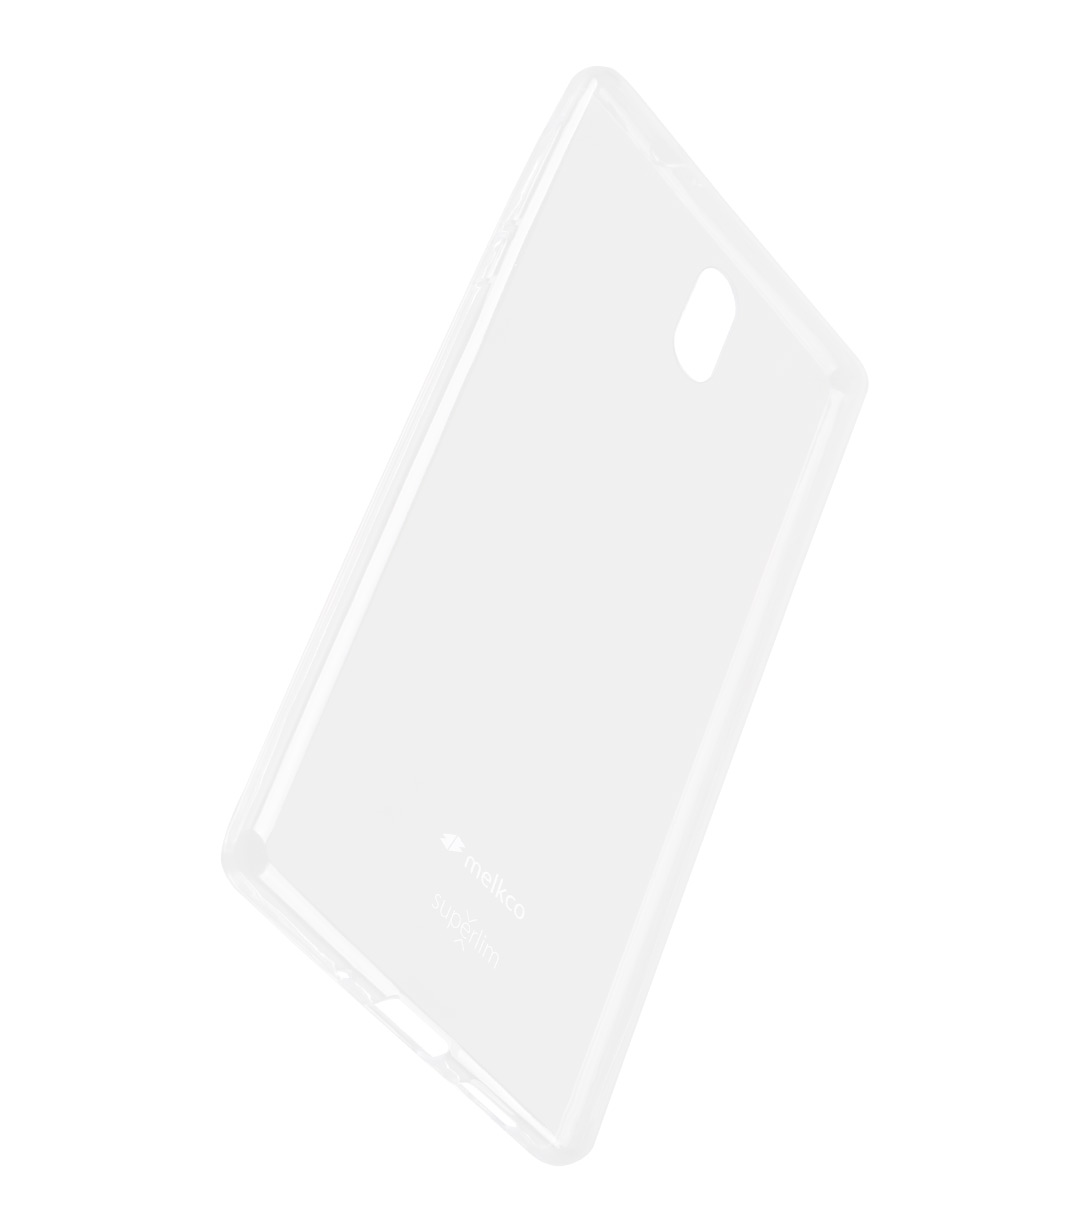 Melkco UltraThin Series Air Superlim TPU Case for Nokia Nokia 3 - ( Transparent )